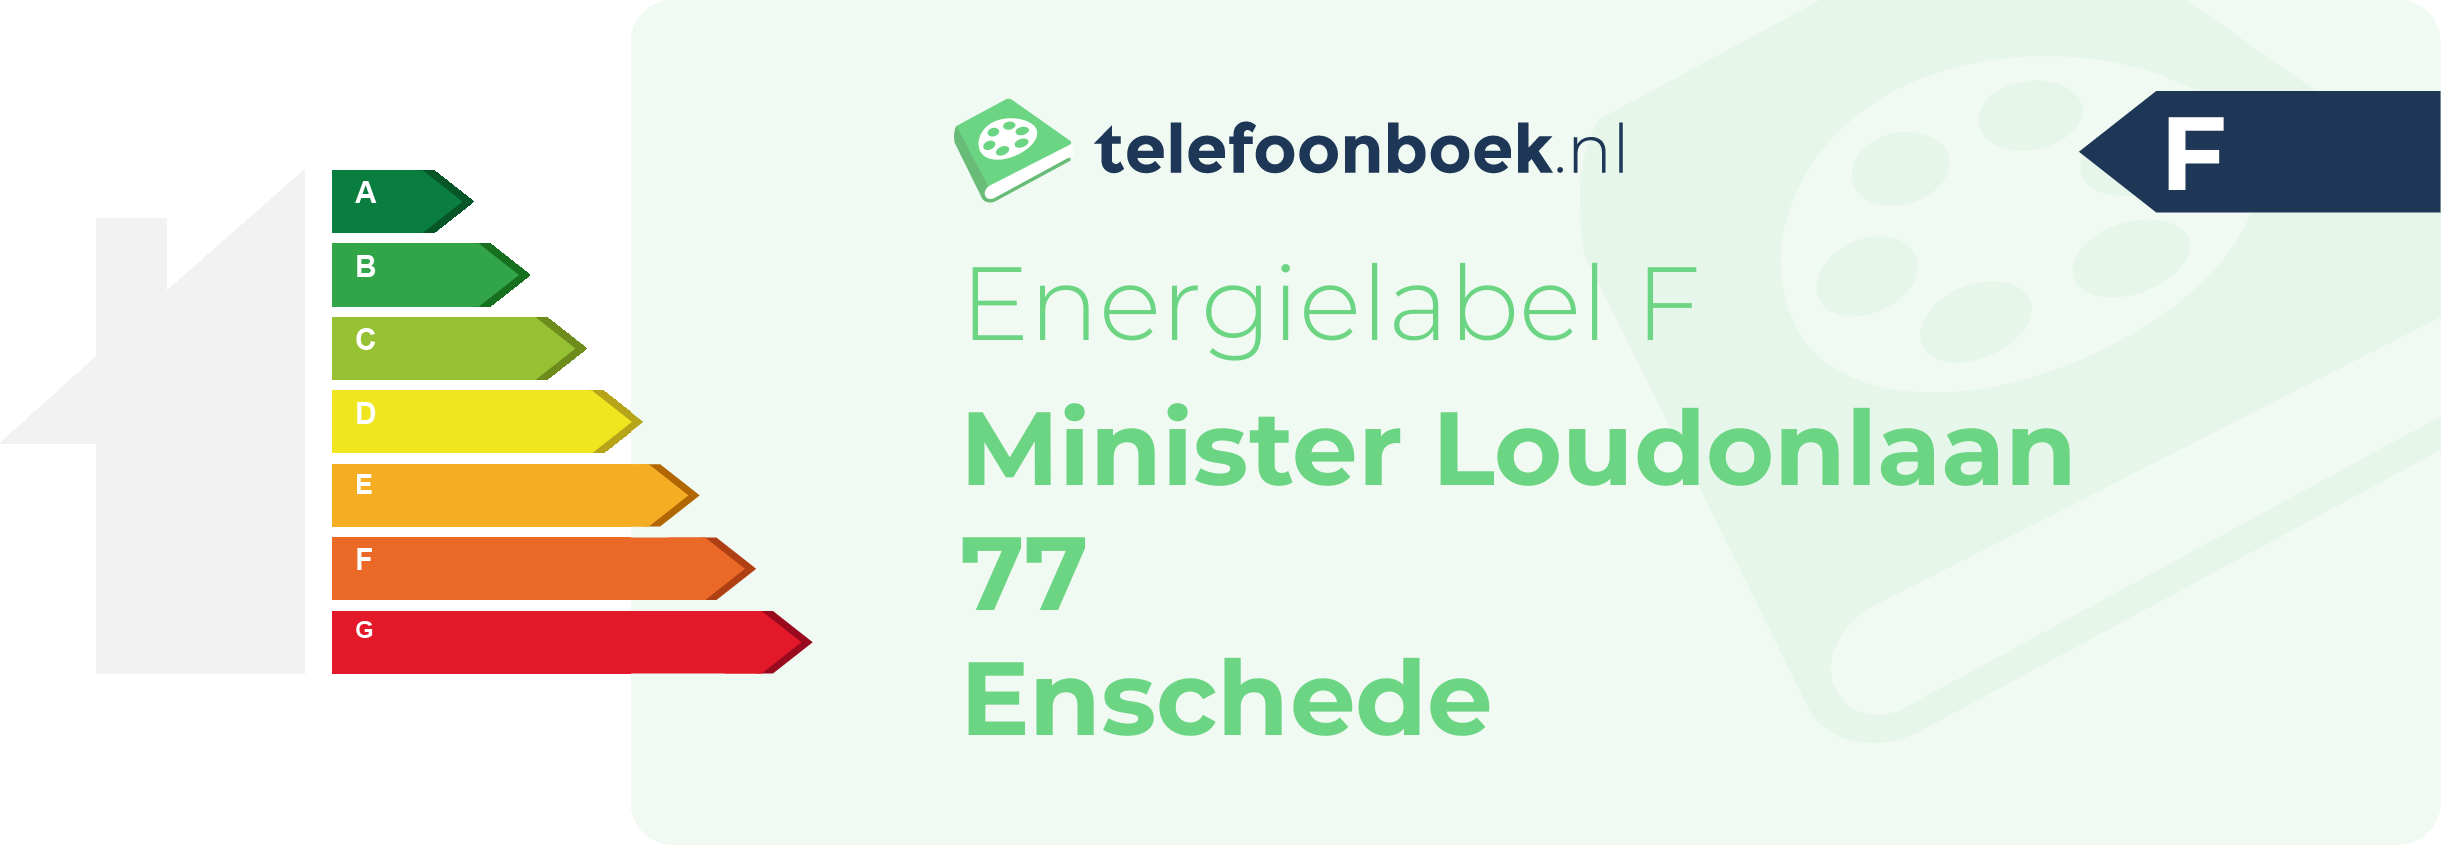 Energielabel Minister Loudonlaan 77 Enschede